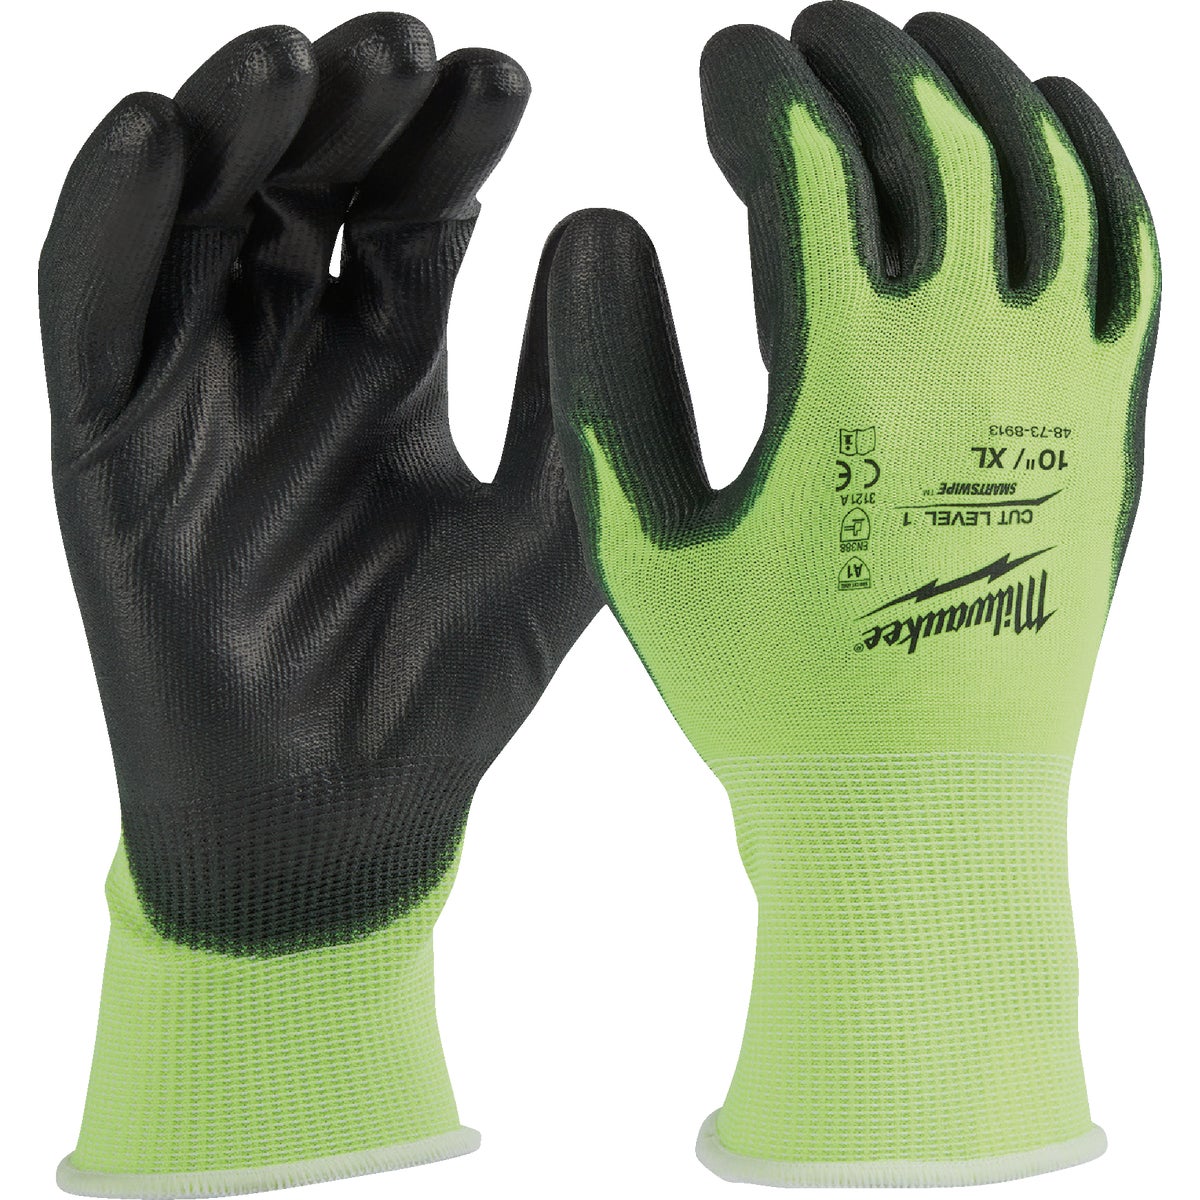 Milwaukee Unisex Medium High Visibility Cut Level 1 Dipped Glove